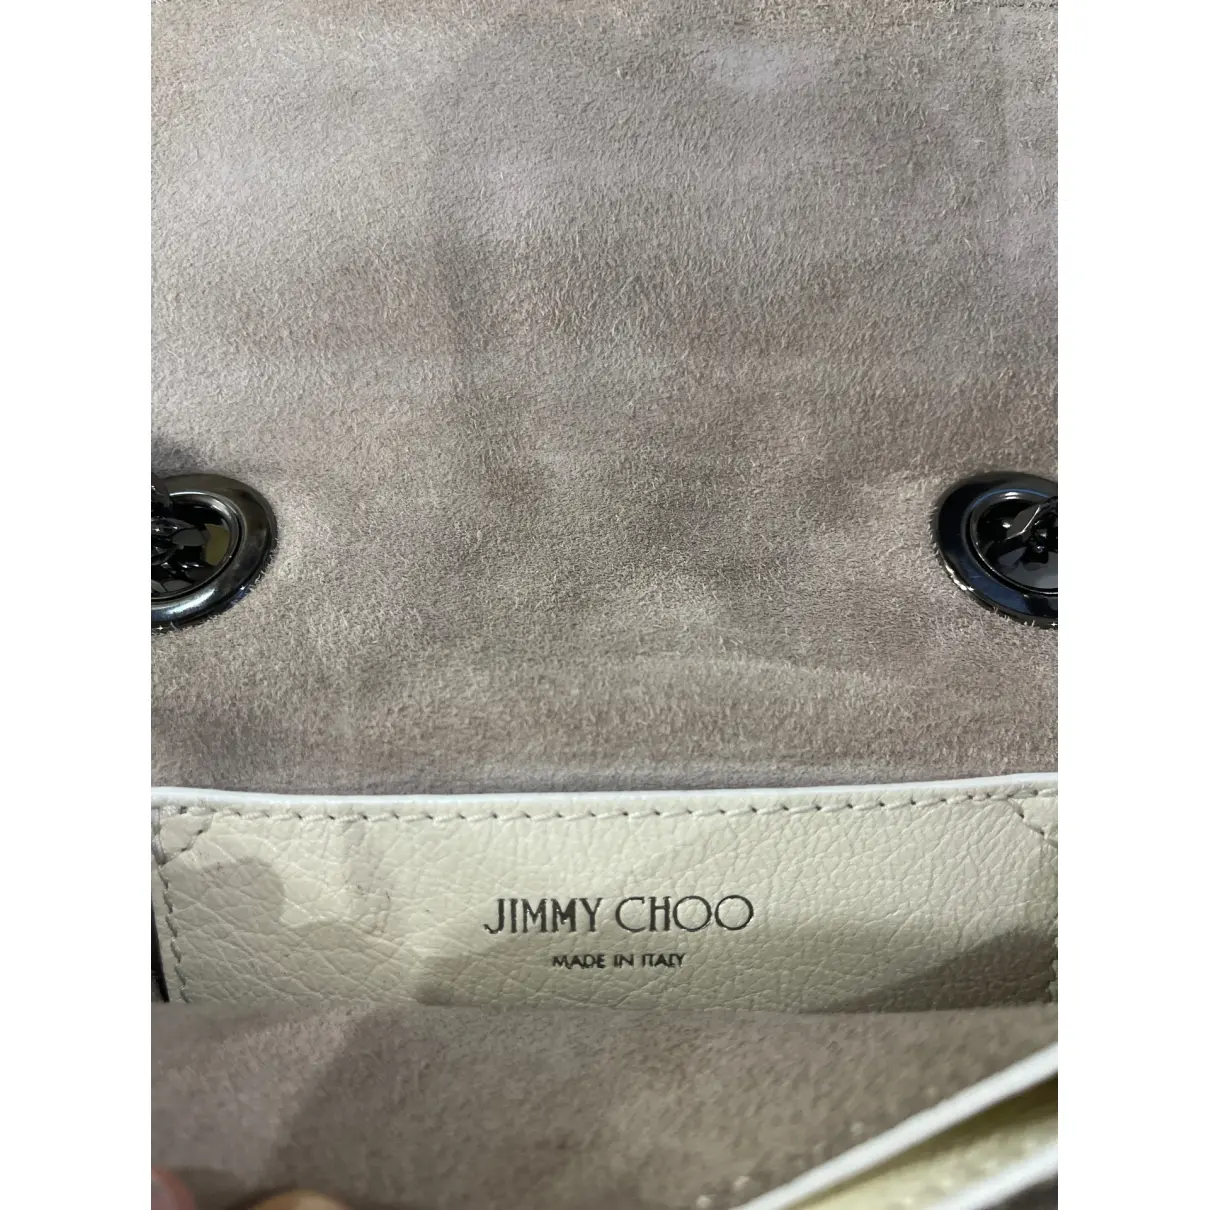 Buy Jimmy Choo Rebel leather crossbody bag online